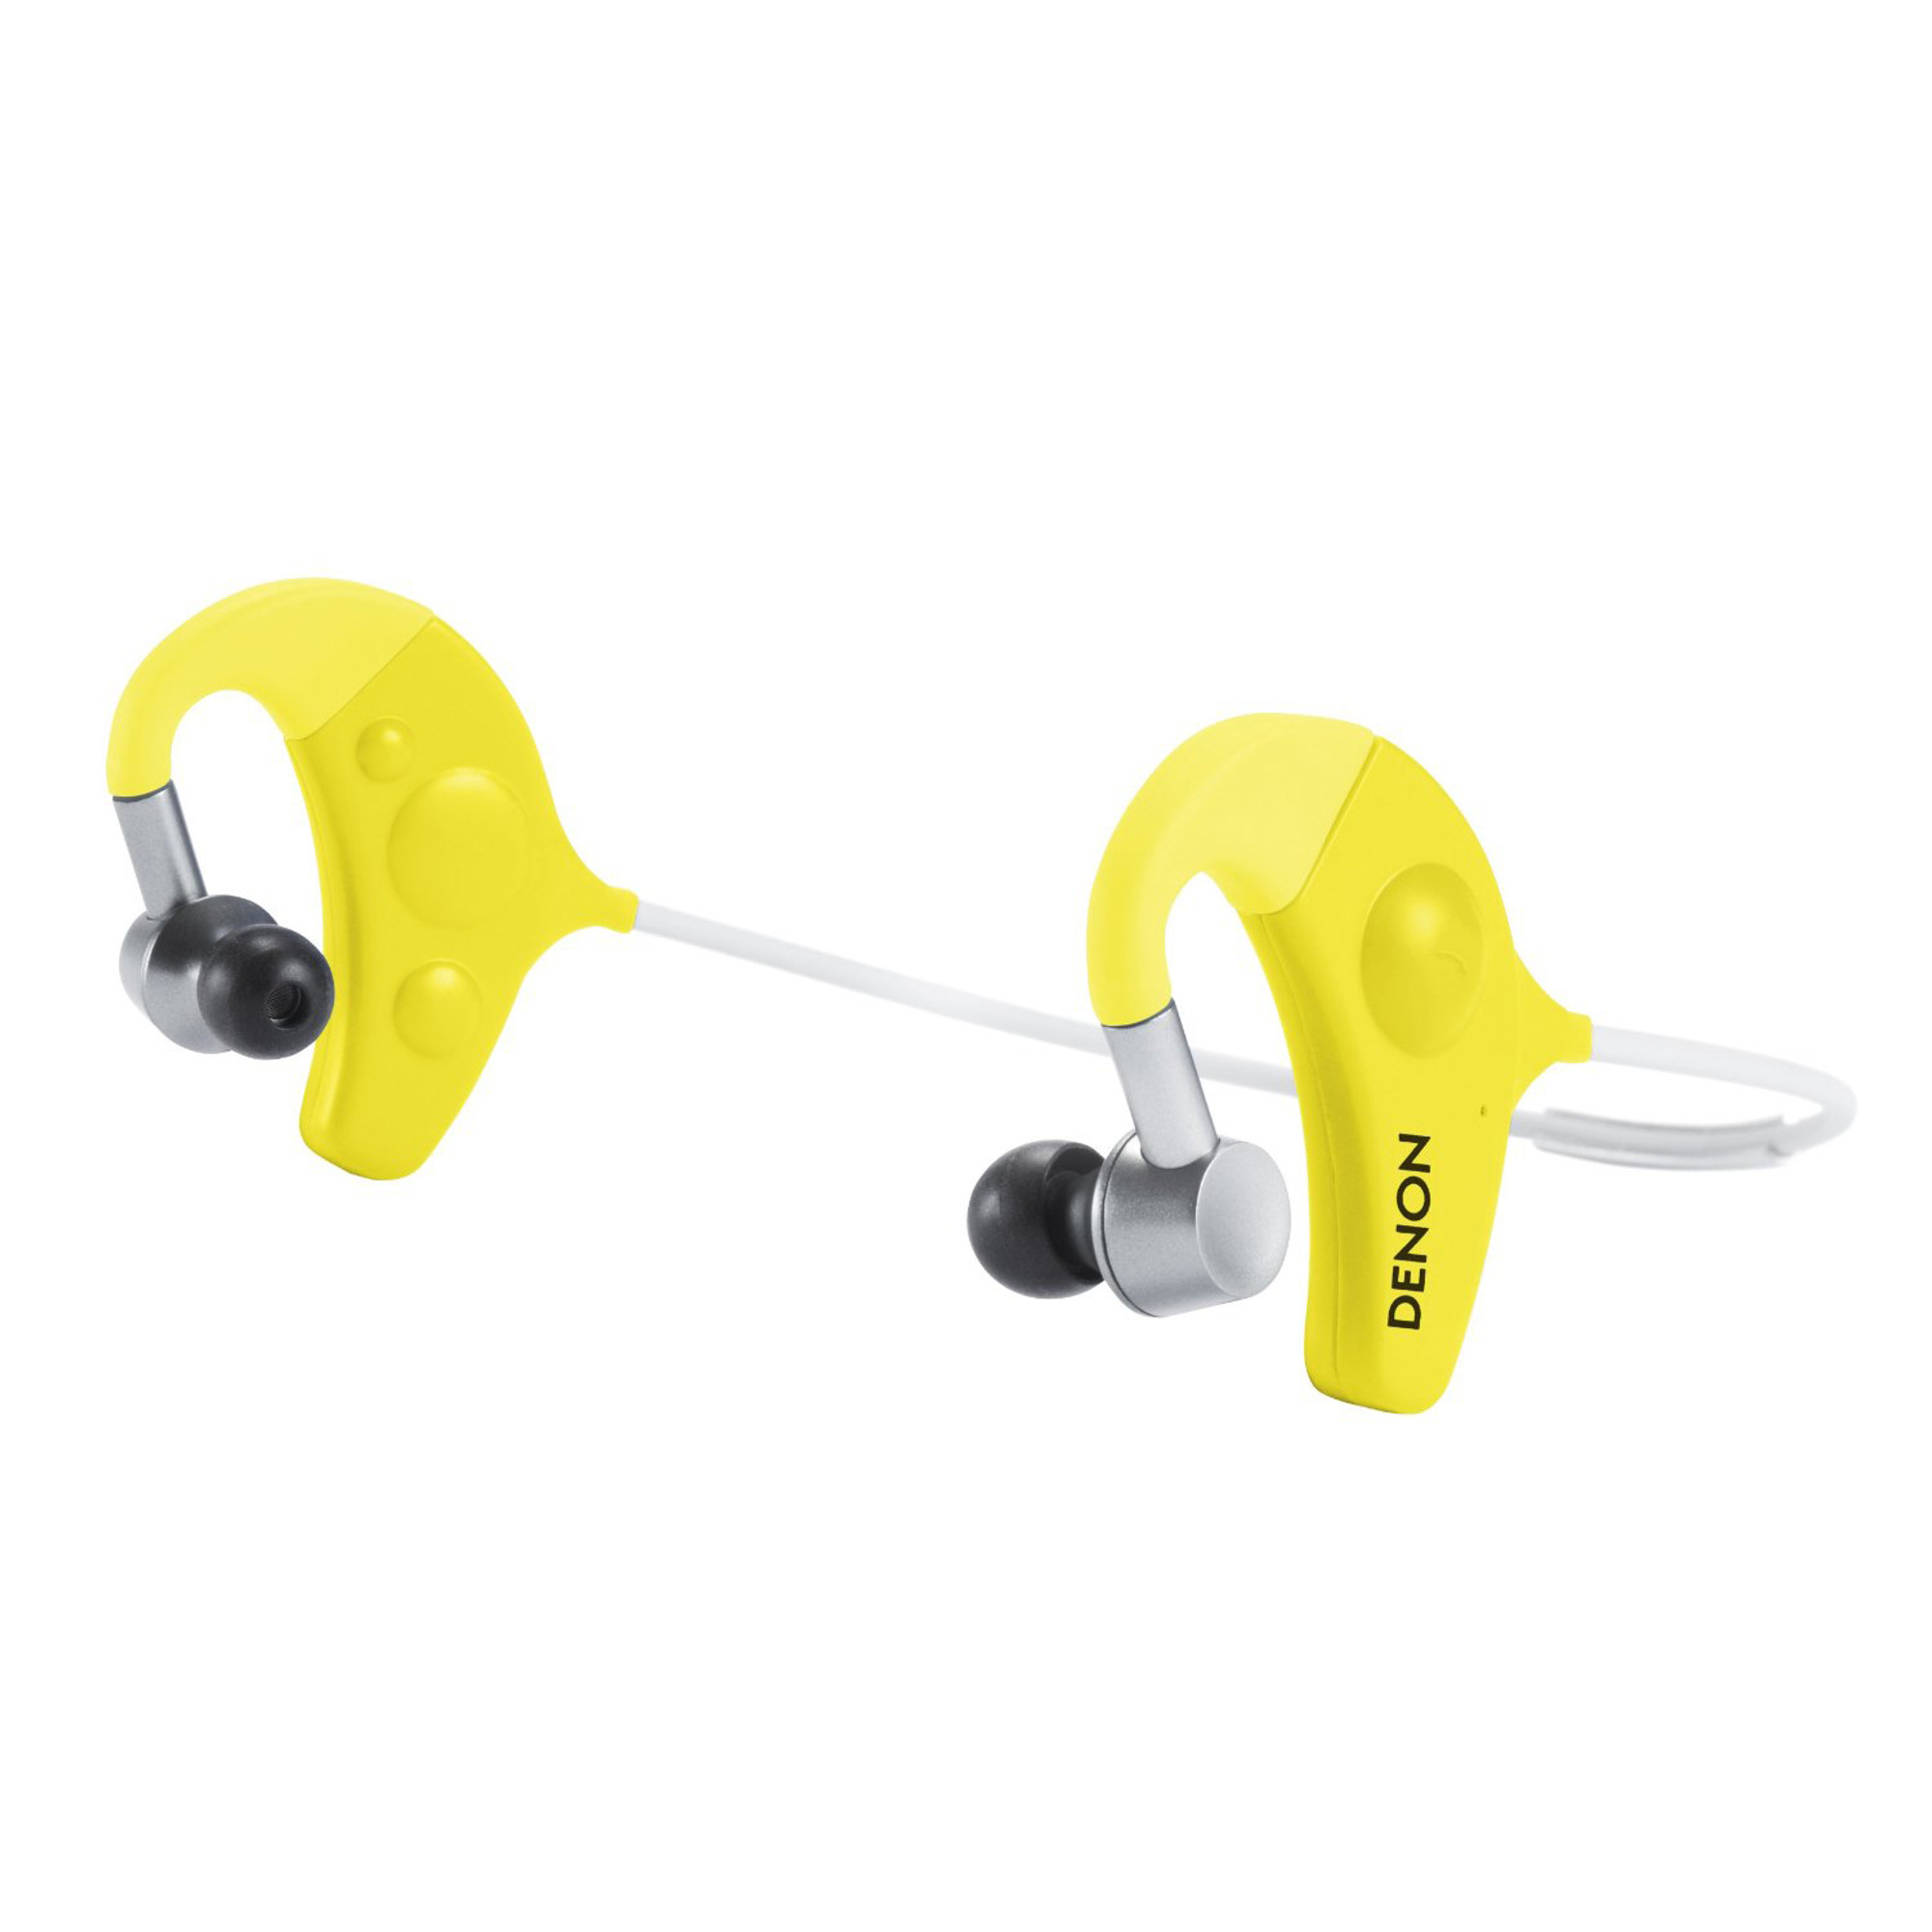 Spaans Vermoorden revolutie Denon Exercise Freak Bluetooth V3.0 In-Ear Stereo Wireless Earbud Headphones